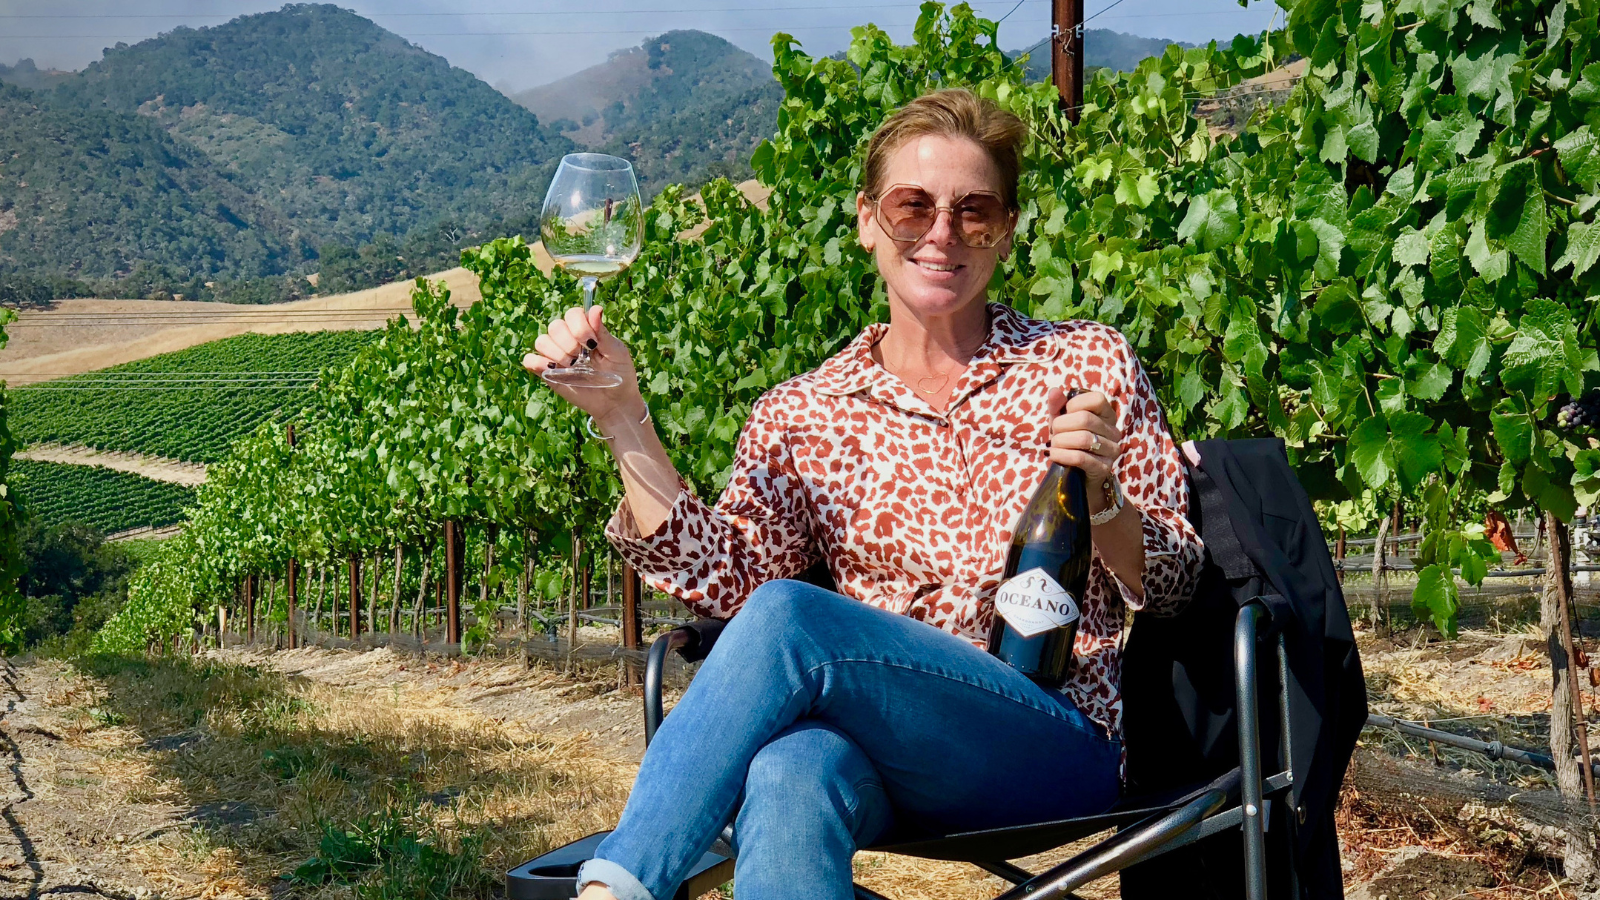 Oceano Wines founder, Rachel Martin sitting in a vineyard and enjoying a glass of Oceano Chardonnay.